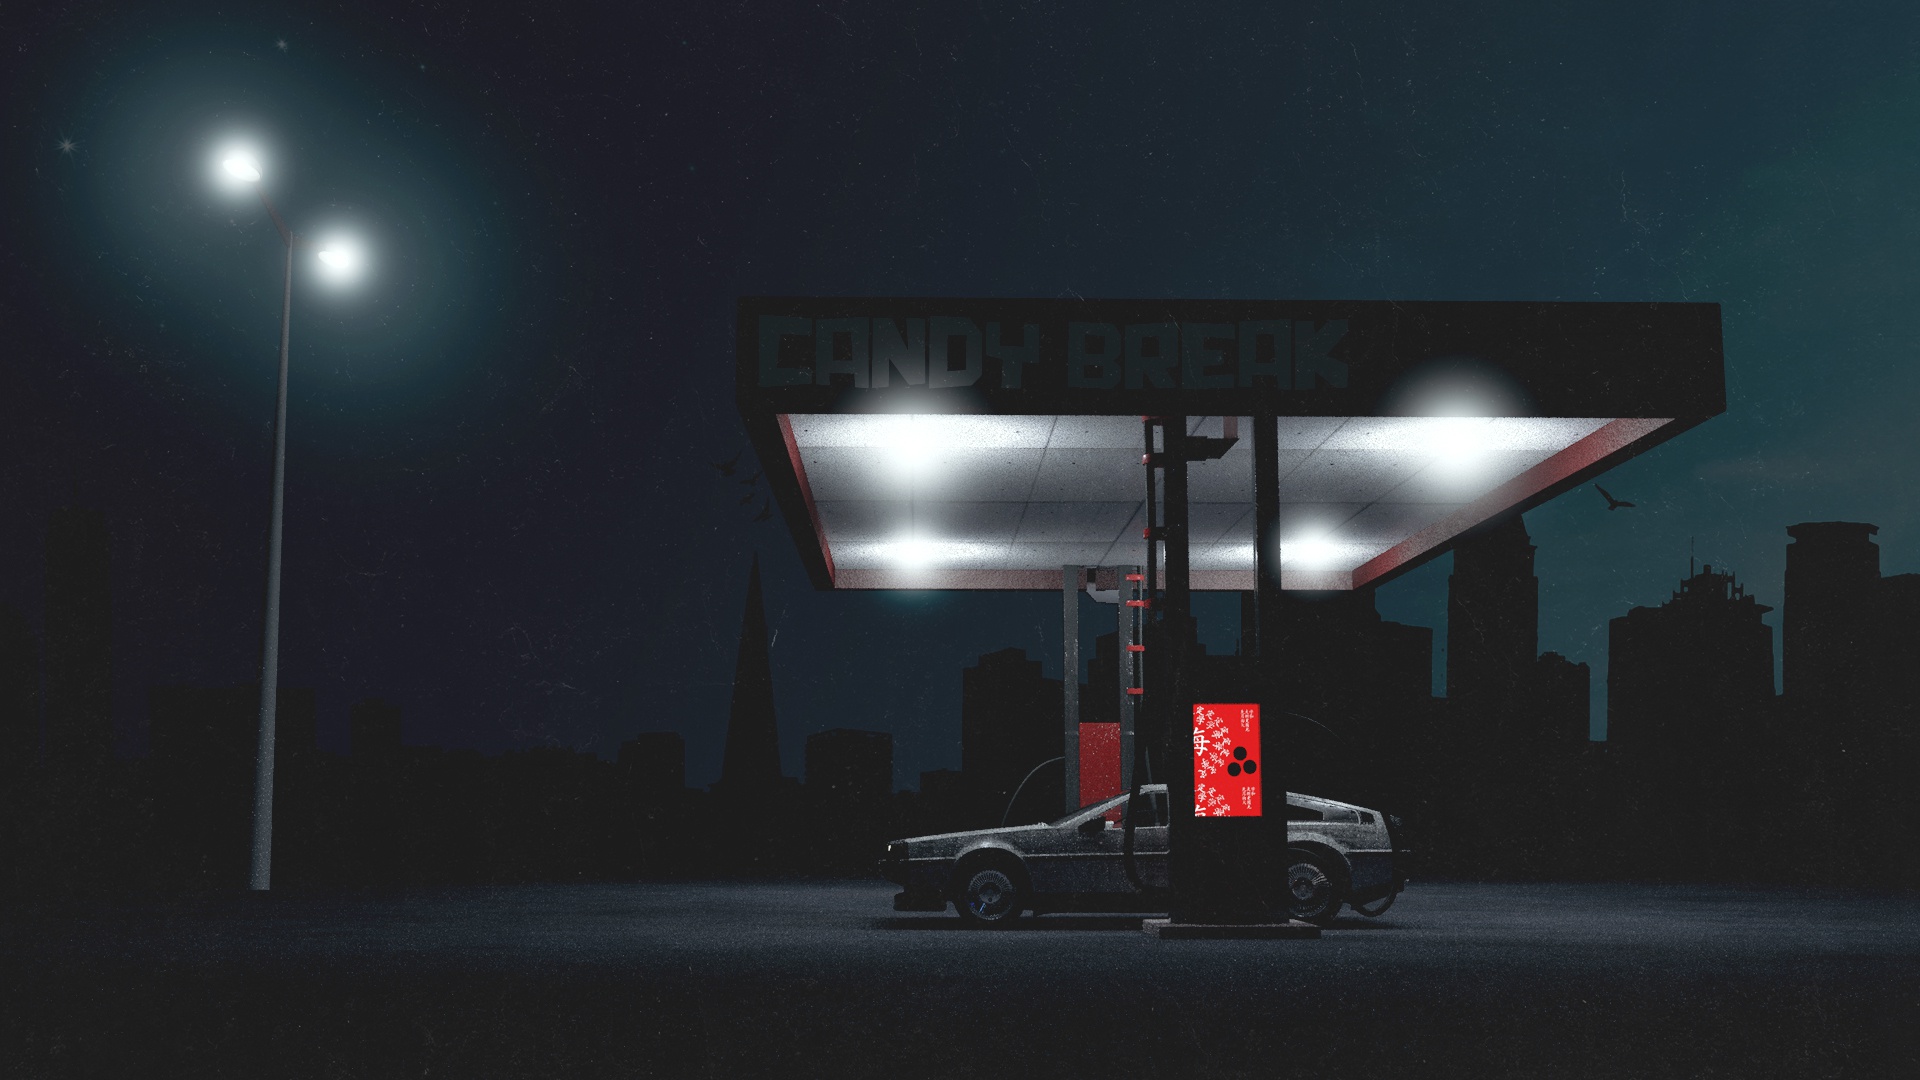 General 1920x1080 night DeLorean car vehicle digital art gas station